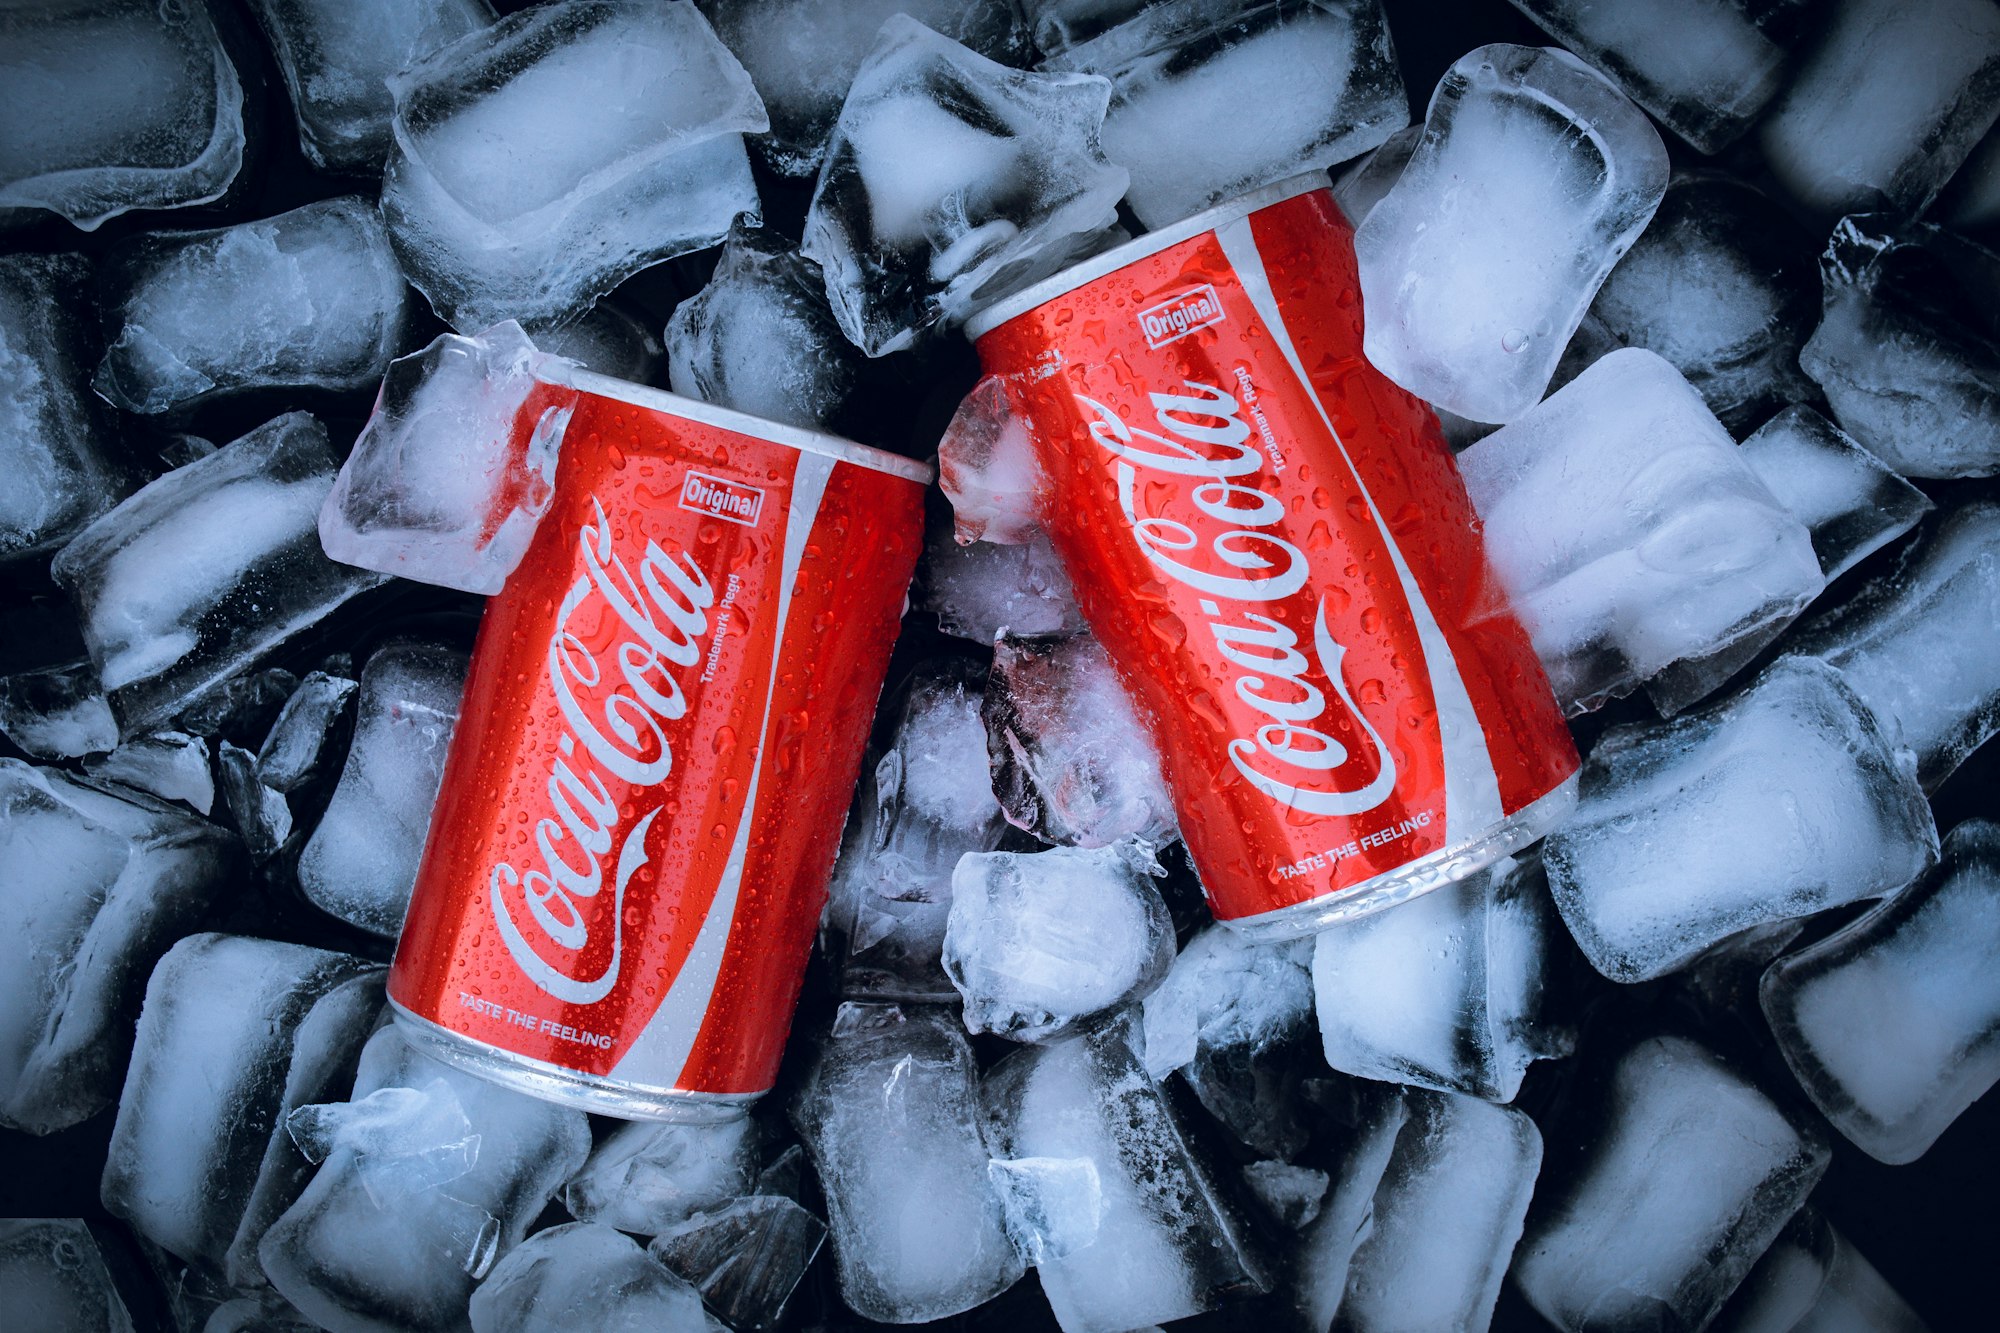 Who Invented Coca-Cola?